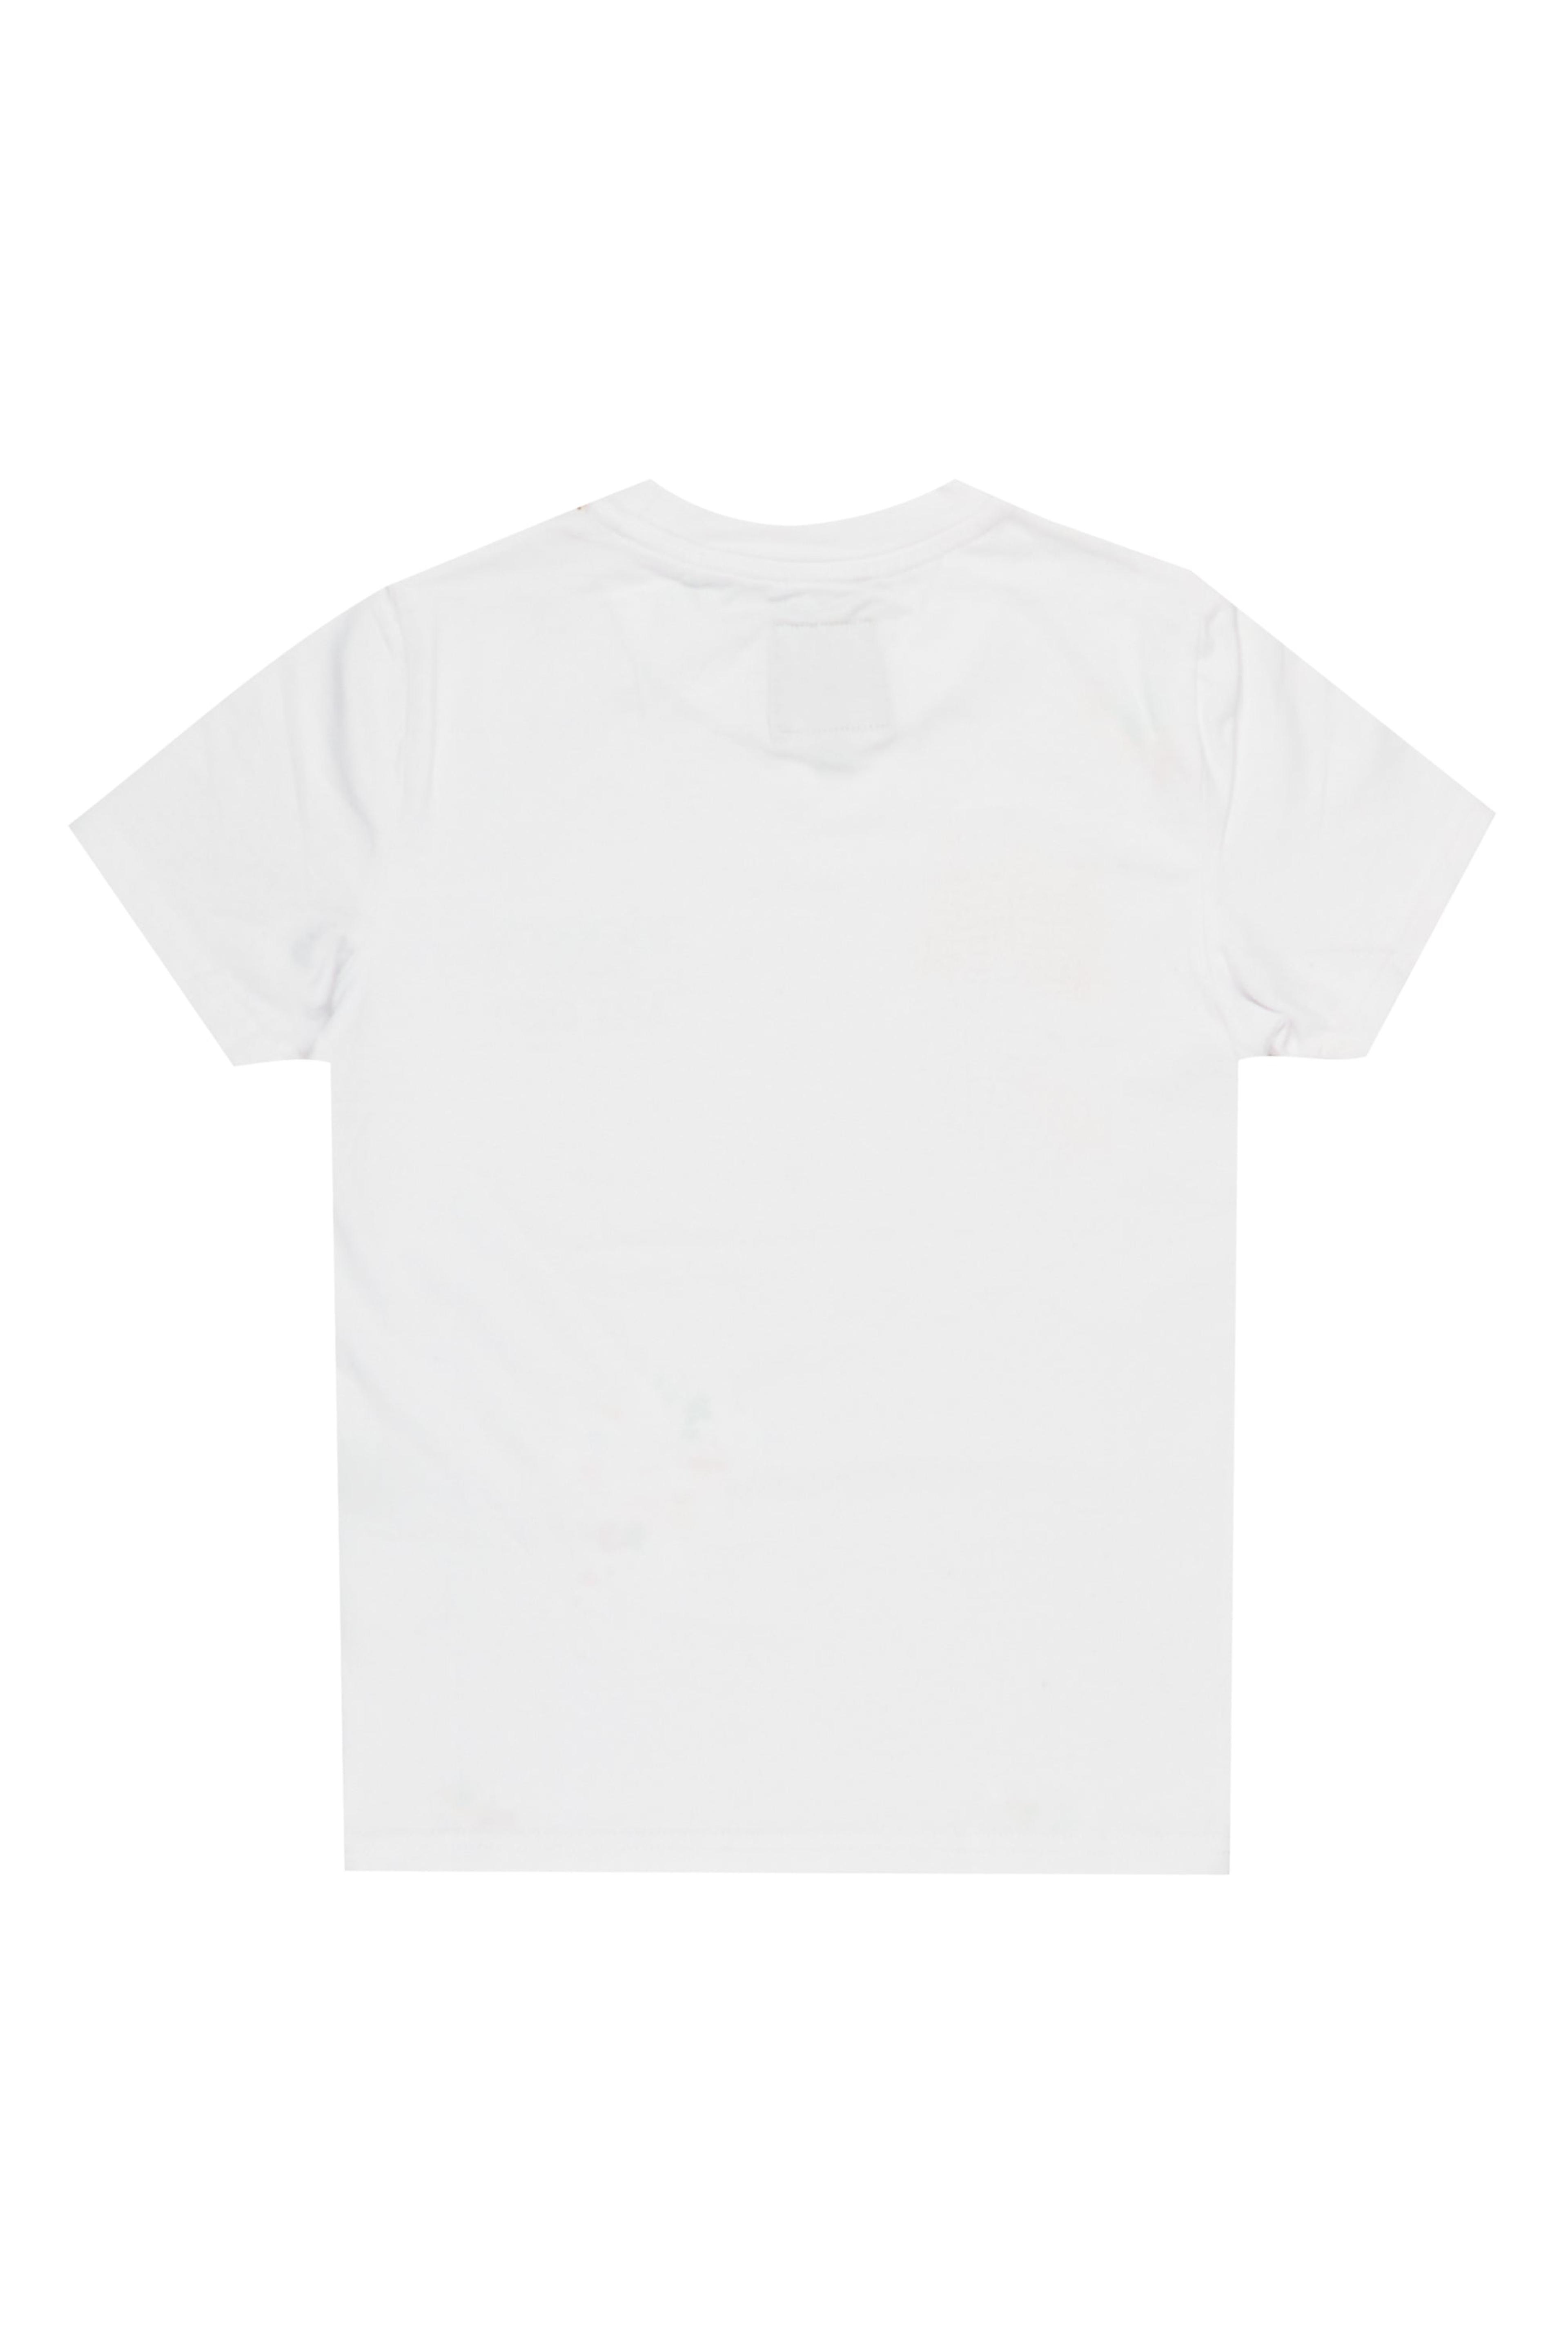 Alternate View 2 of Boys Palmer White T-Shirt